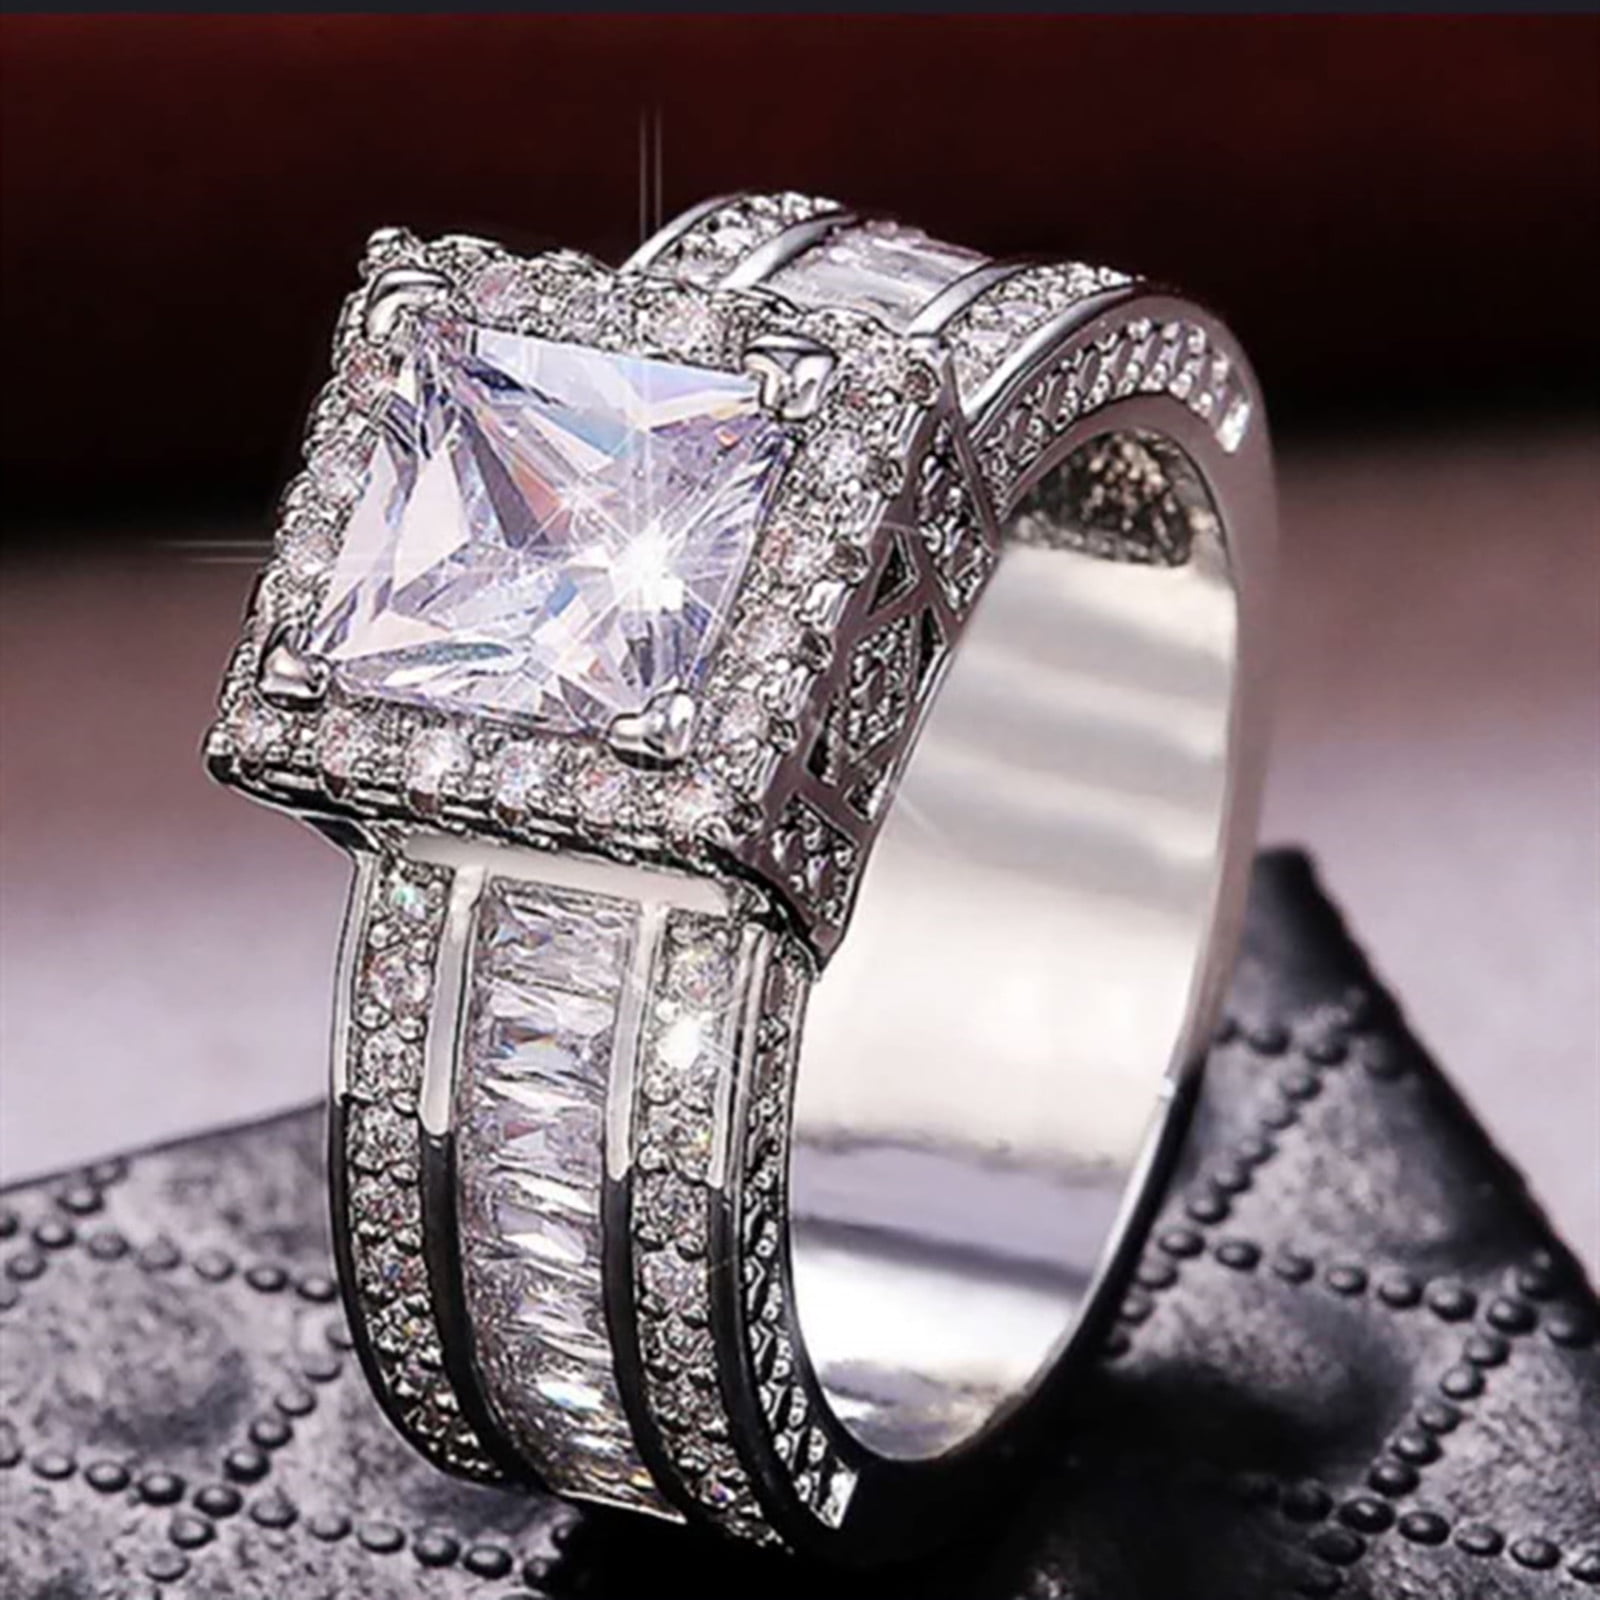 Gorgeous Diamond Wedding Ring Set - jewelry - by owner - sale - craigslist